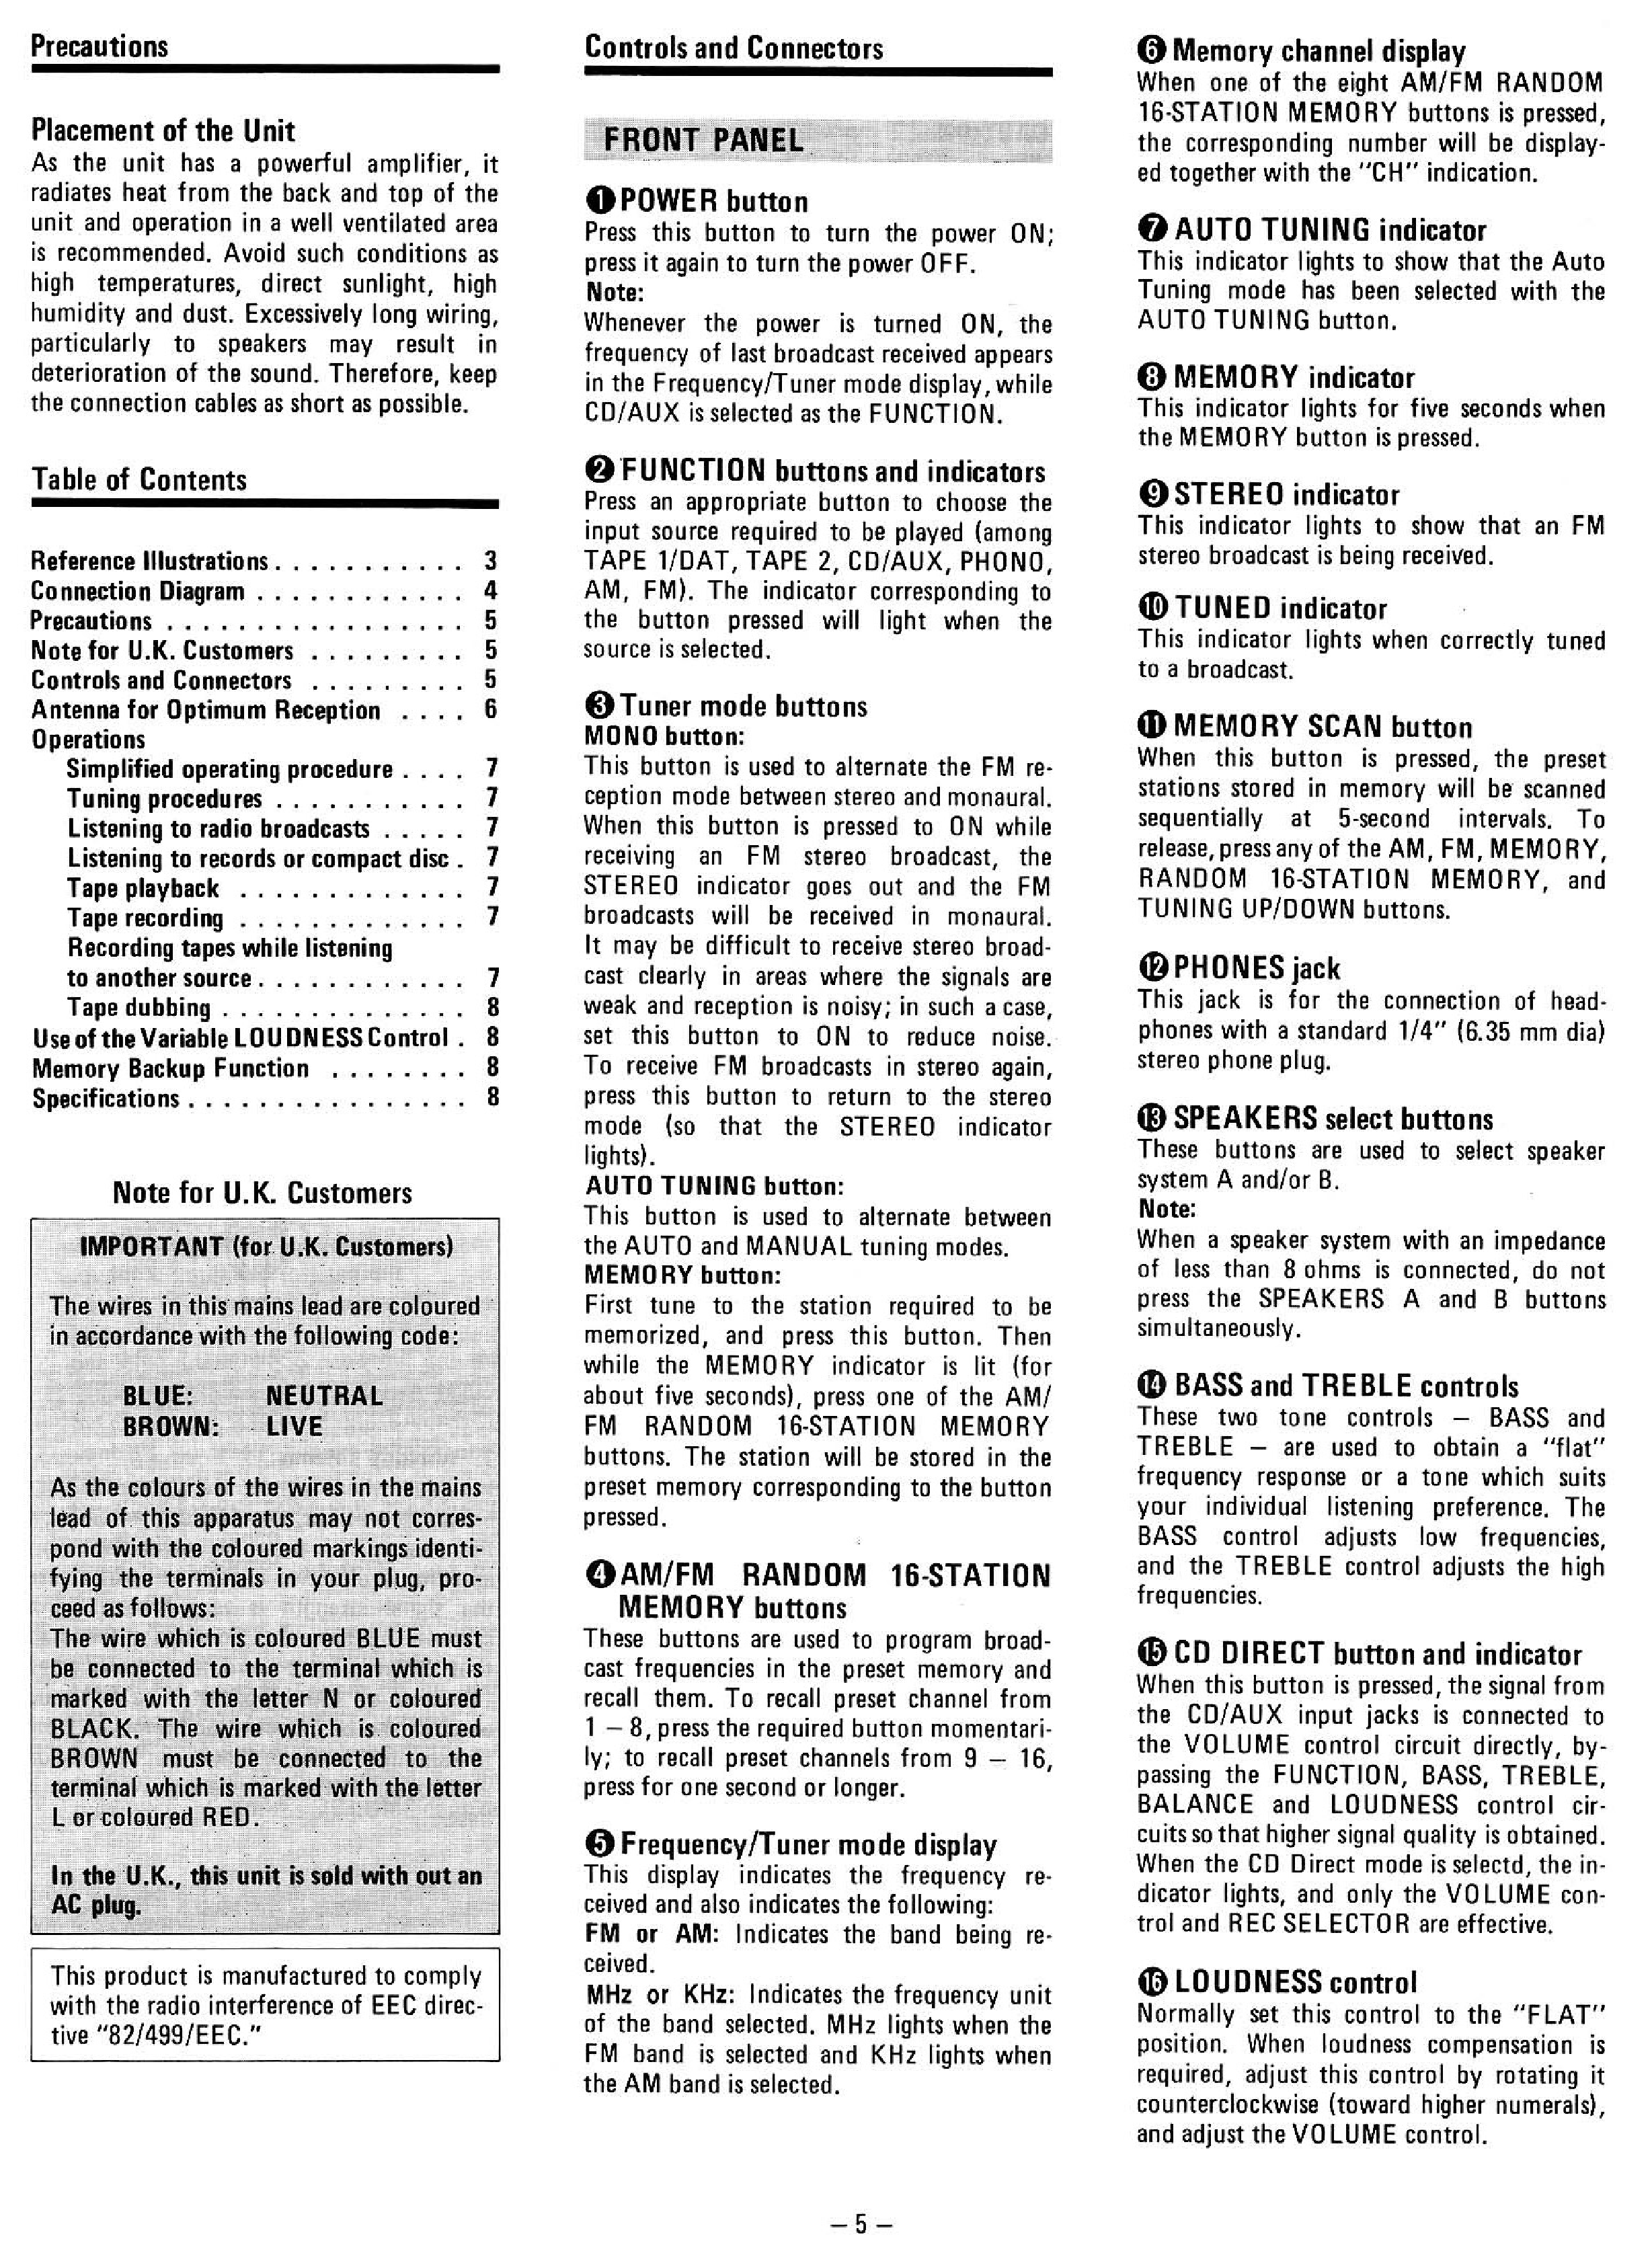 TEAC AG-350 - Owner's Manual Immediate Download